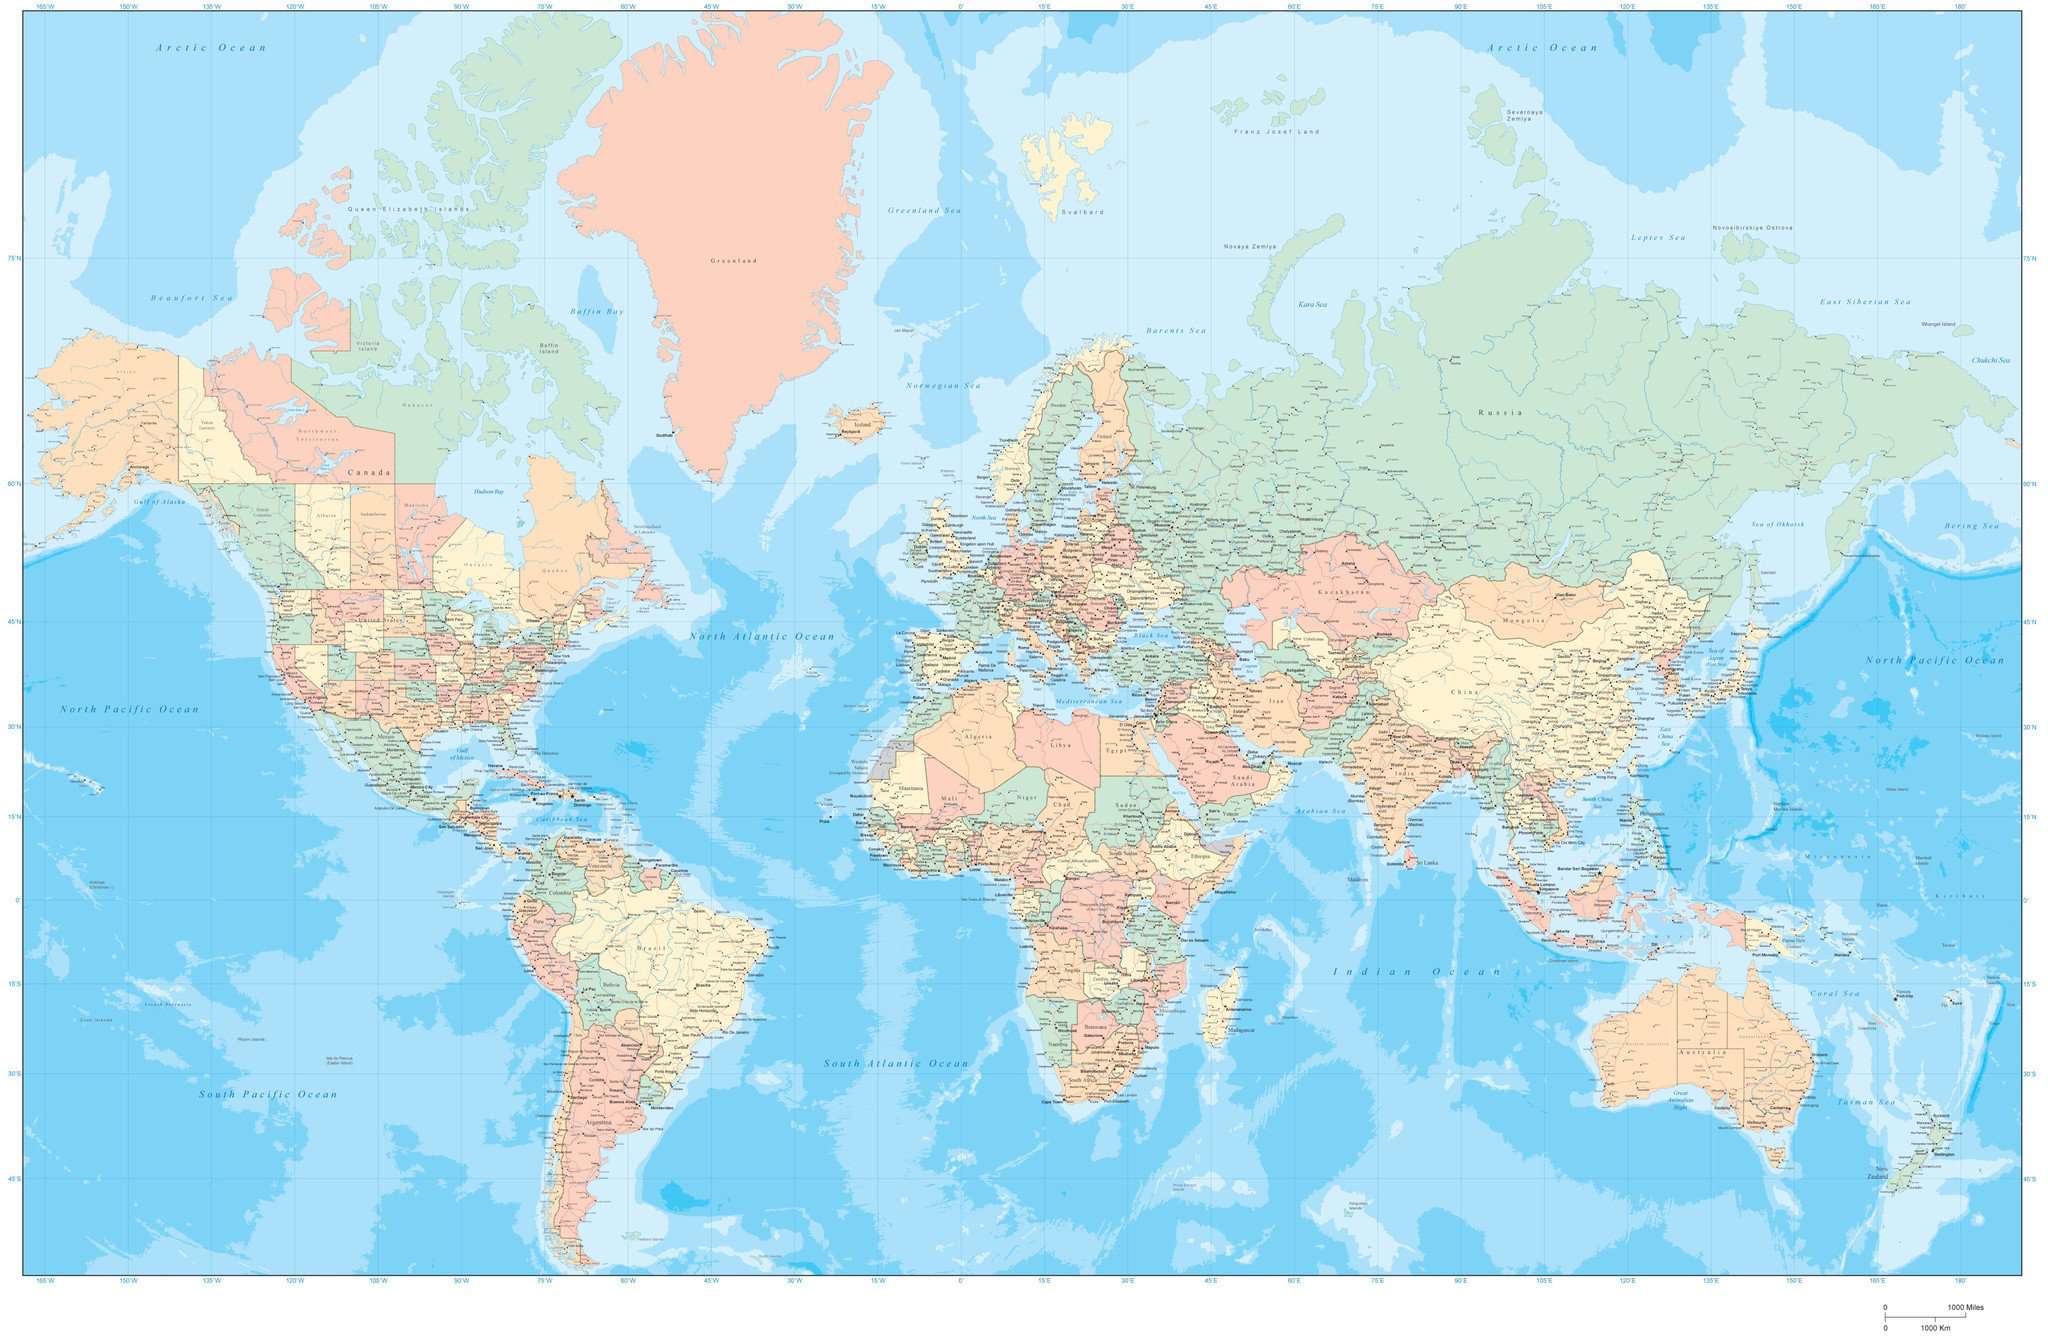 Mercator Map Of The World